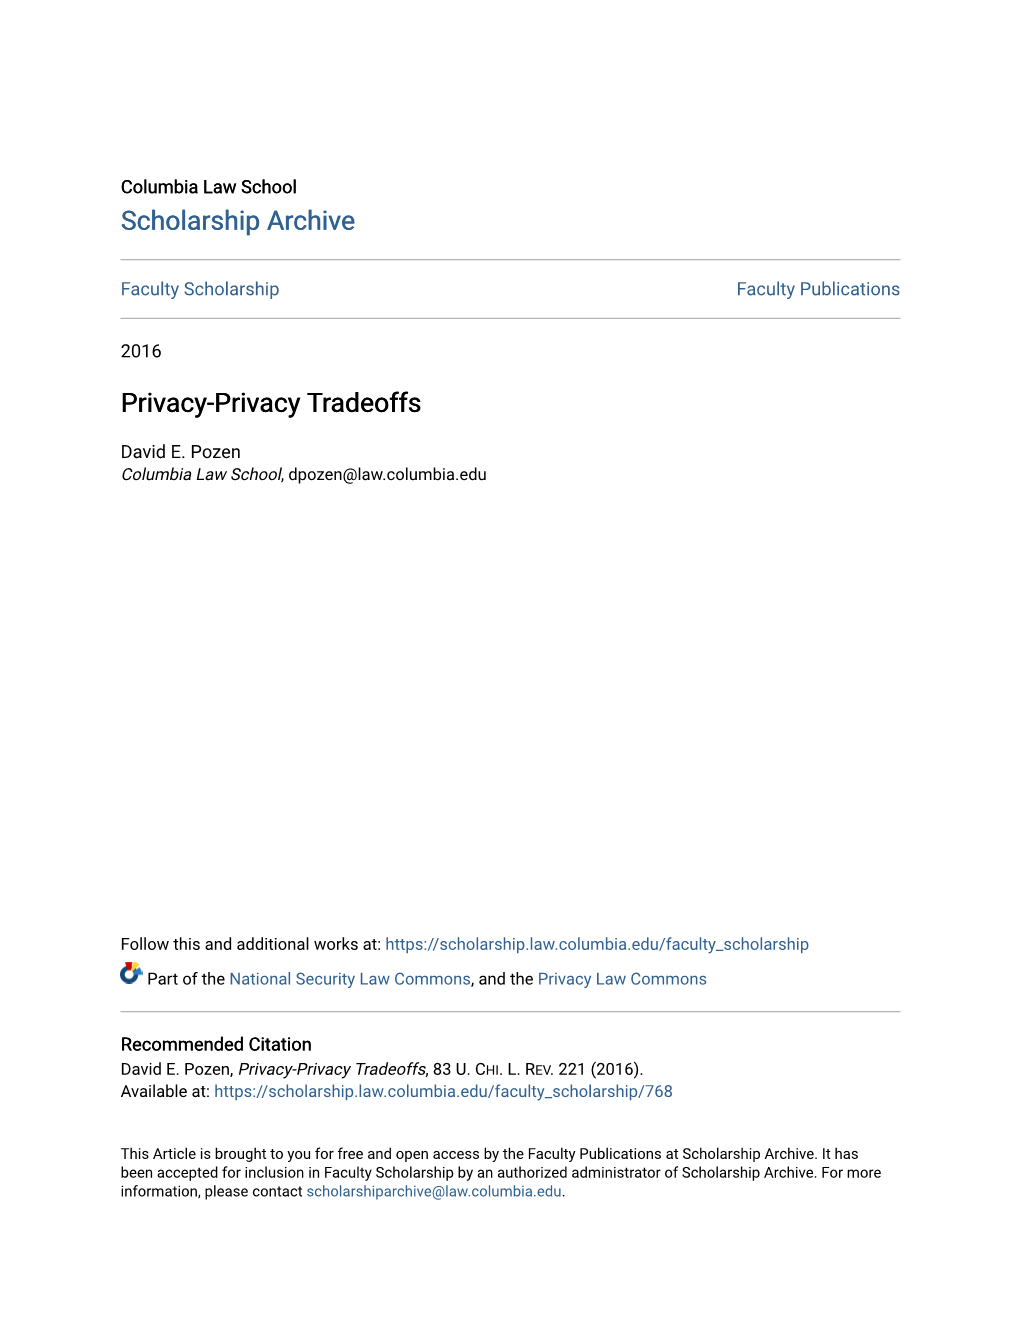 Privacy-Privacy Tradeoffs